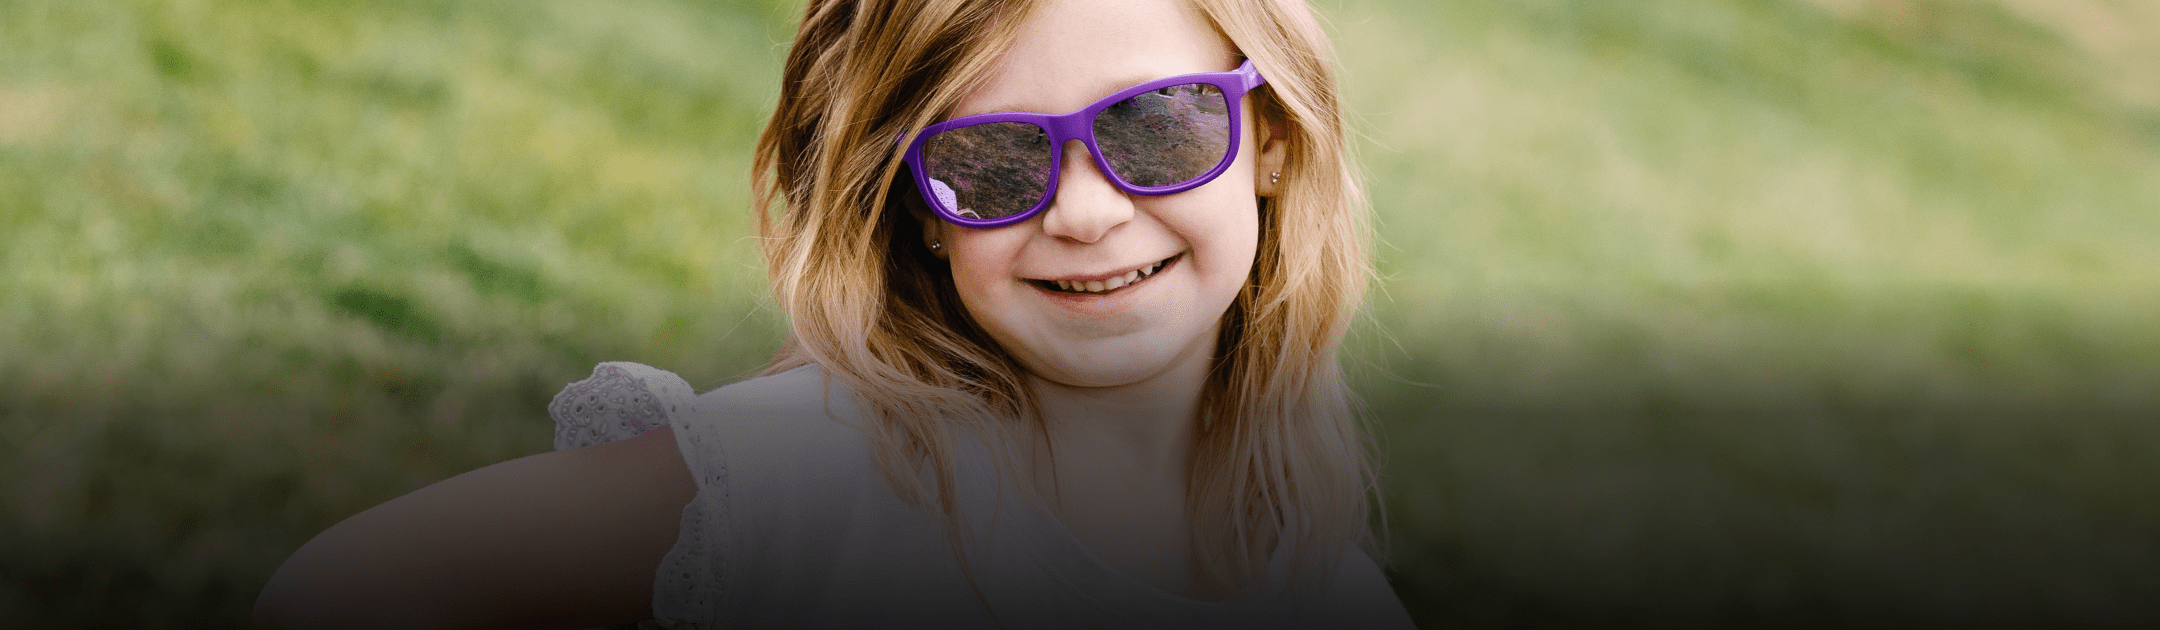 FEISEDY Kids Sunglasses UV400 Protection Polarized Lenses Boys Girls Age  3-9 TPEE Rubber Square Flexible Shades B2806